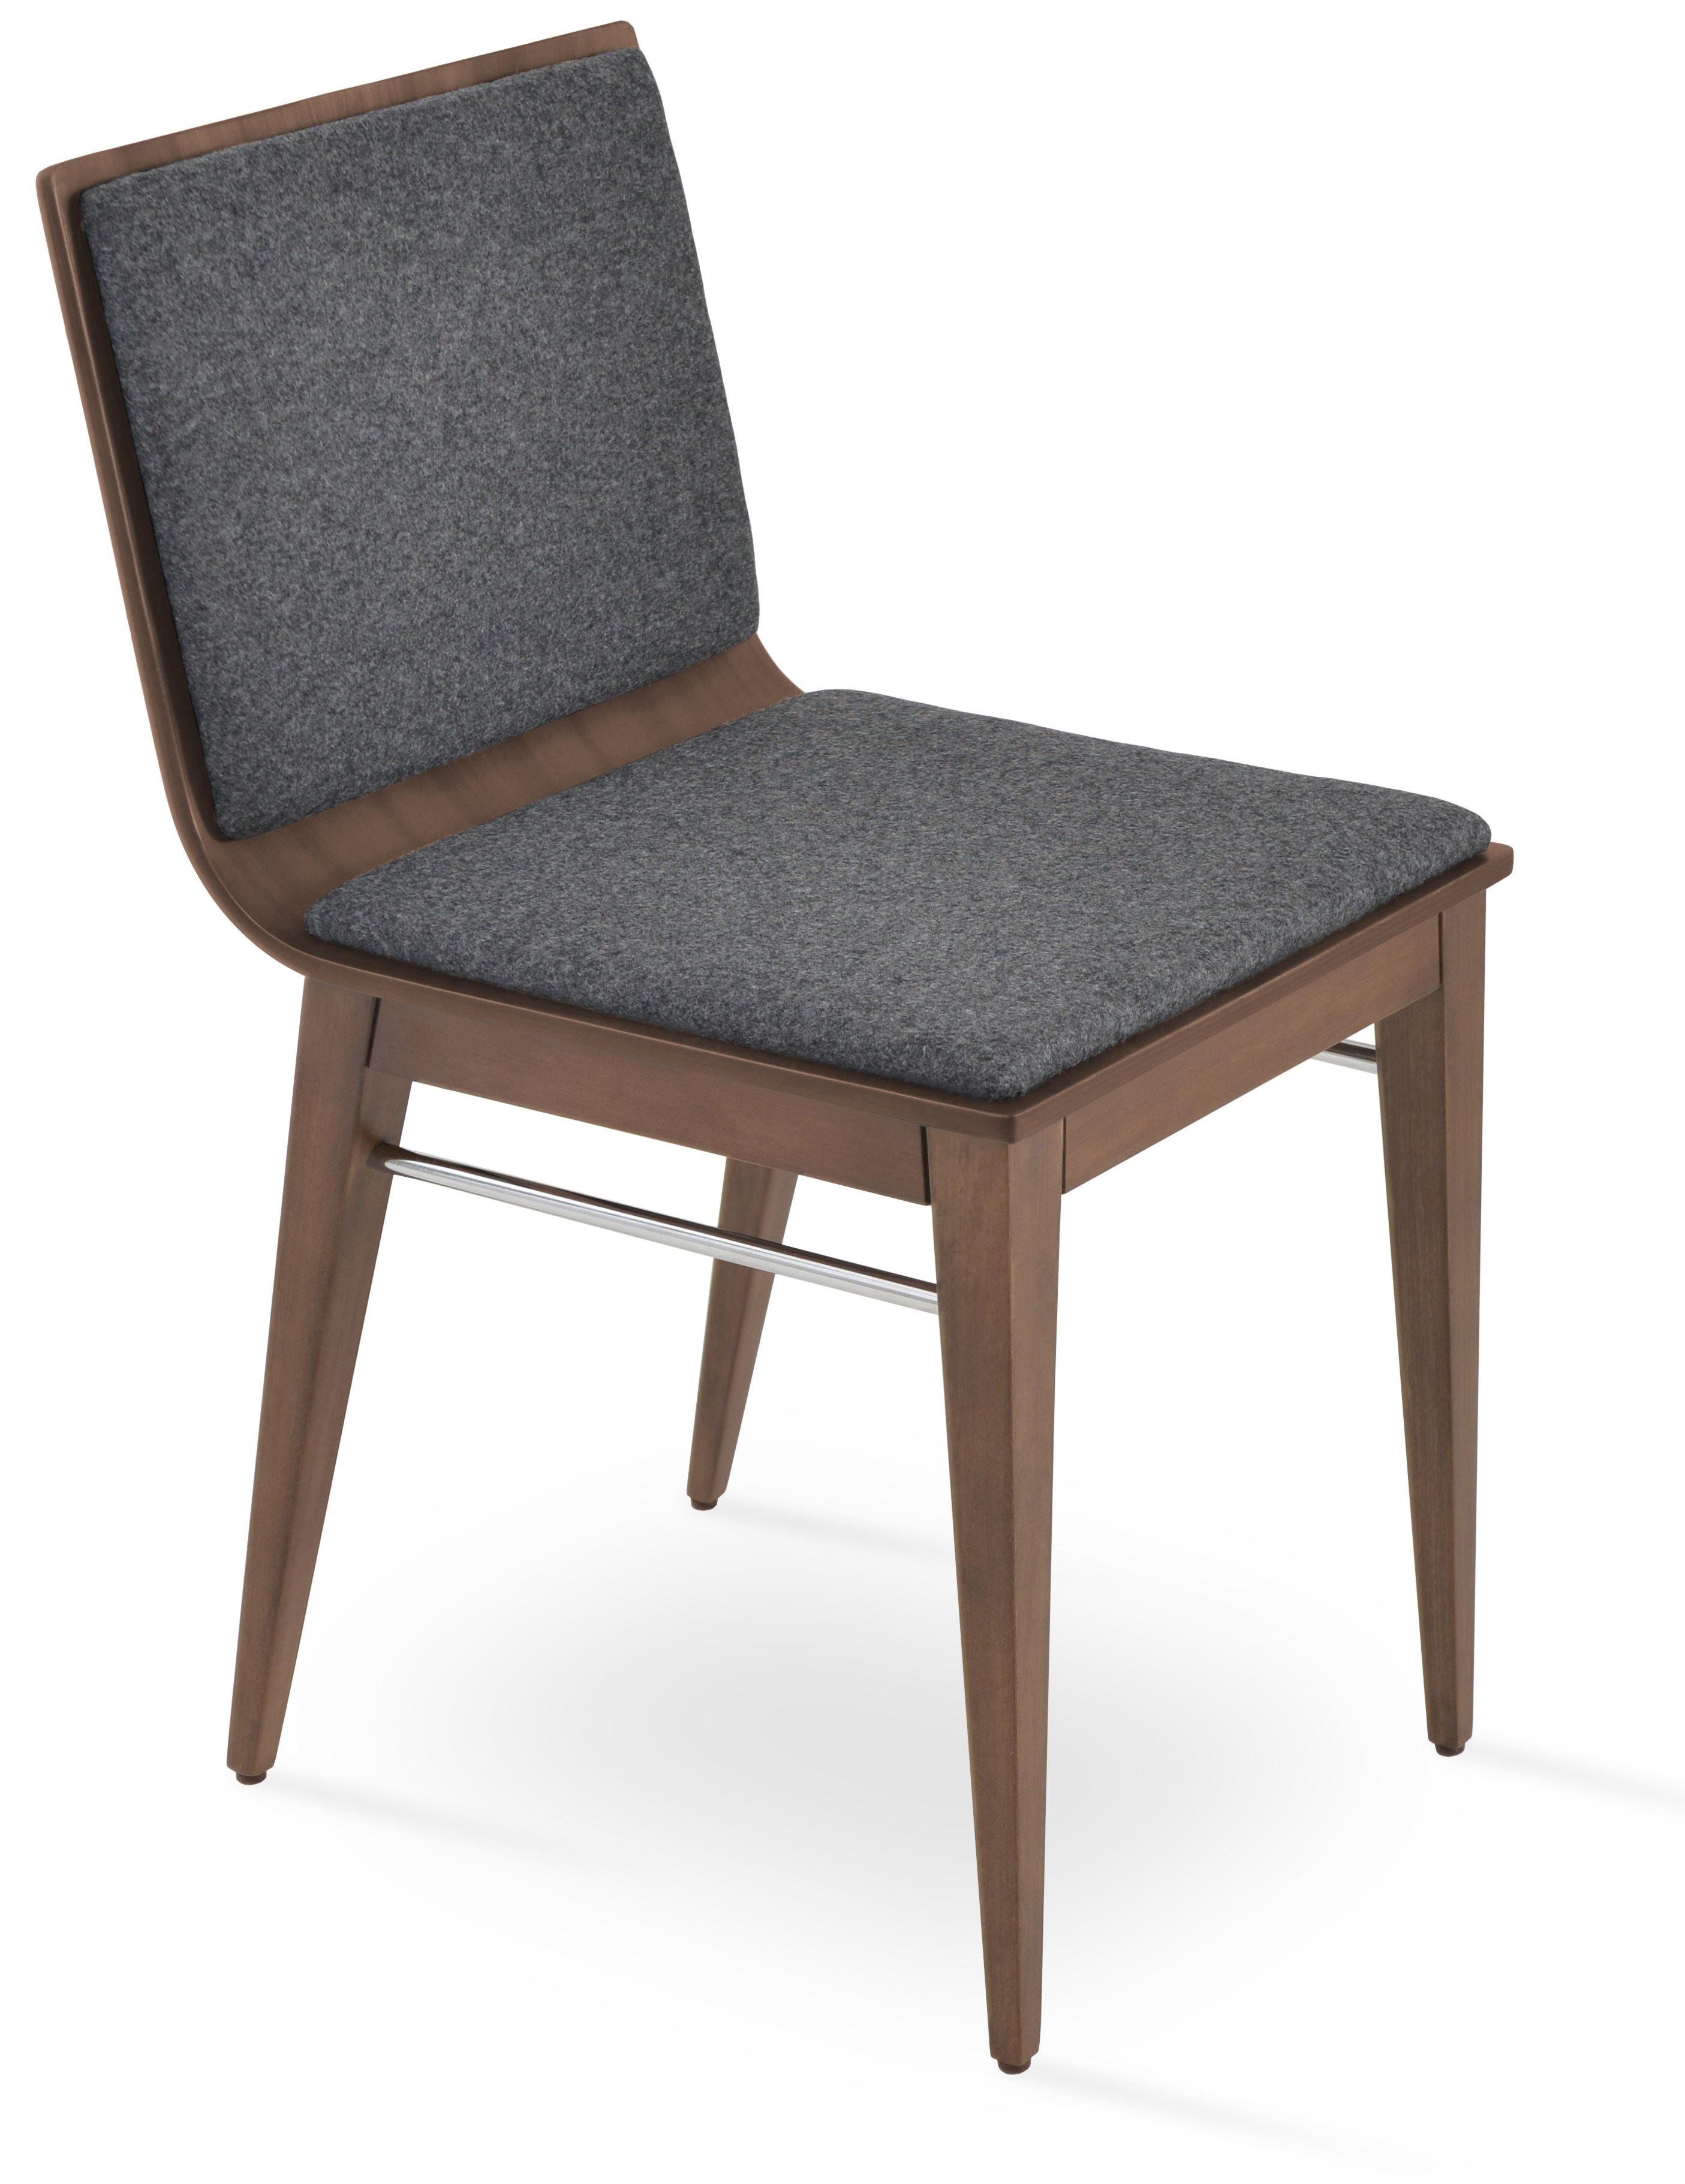 Corona Wood Dining Chair |Modern Luxury Furniture Store in Paramus, NJ